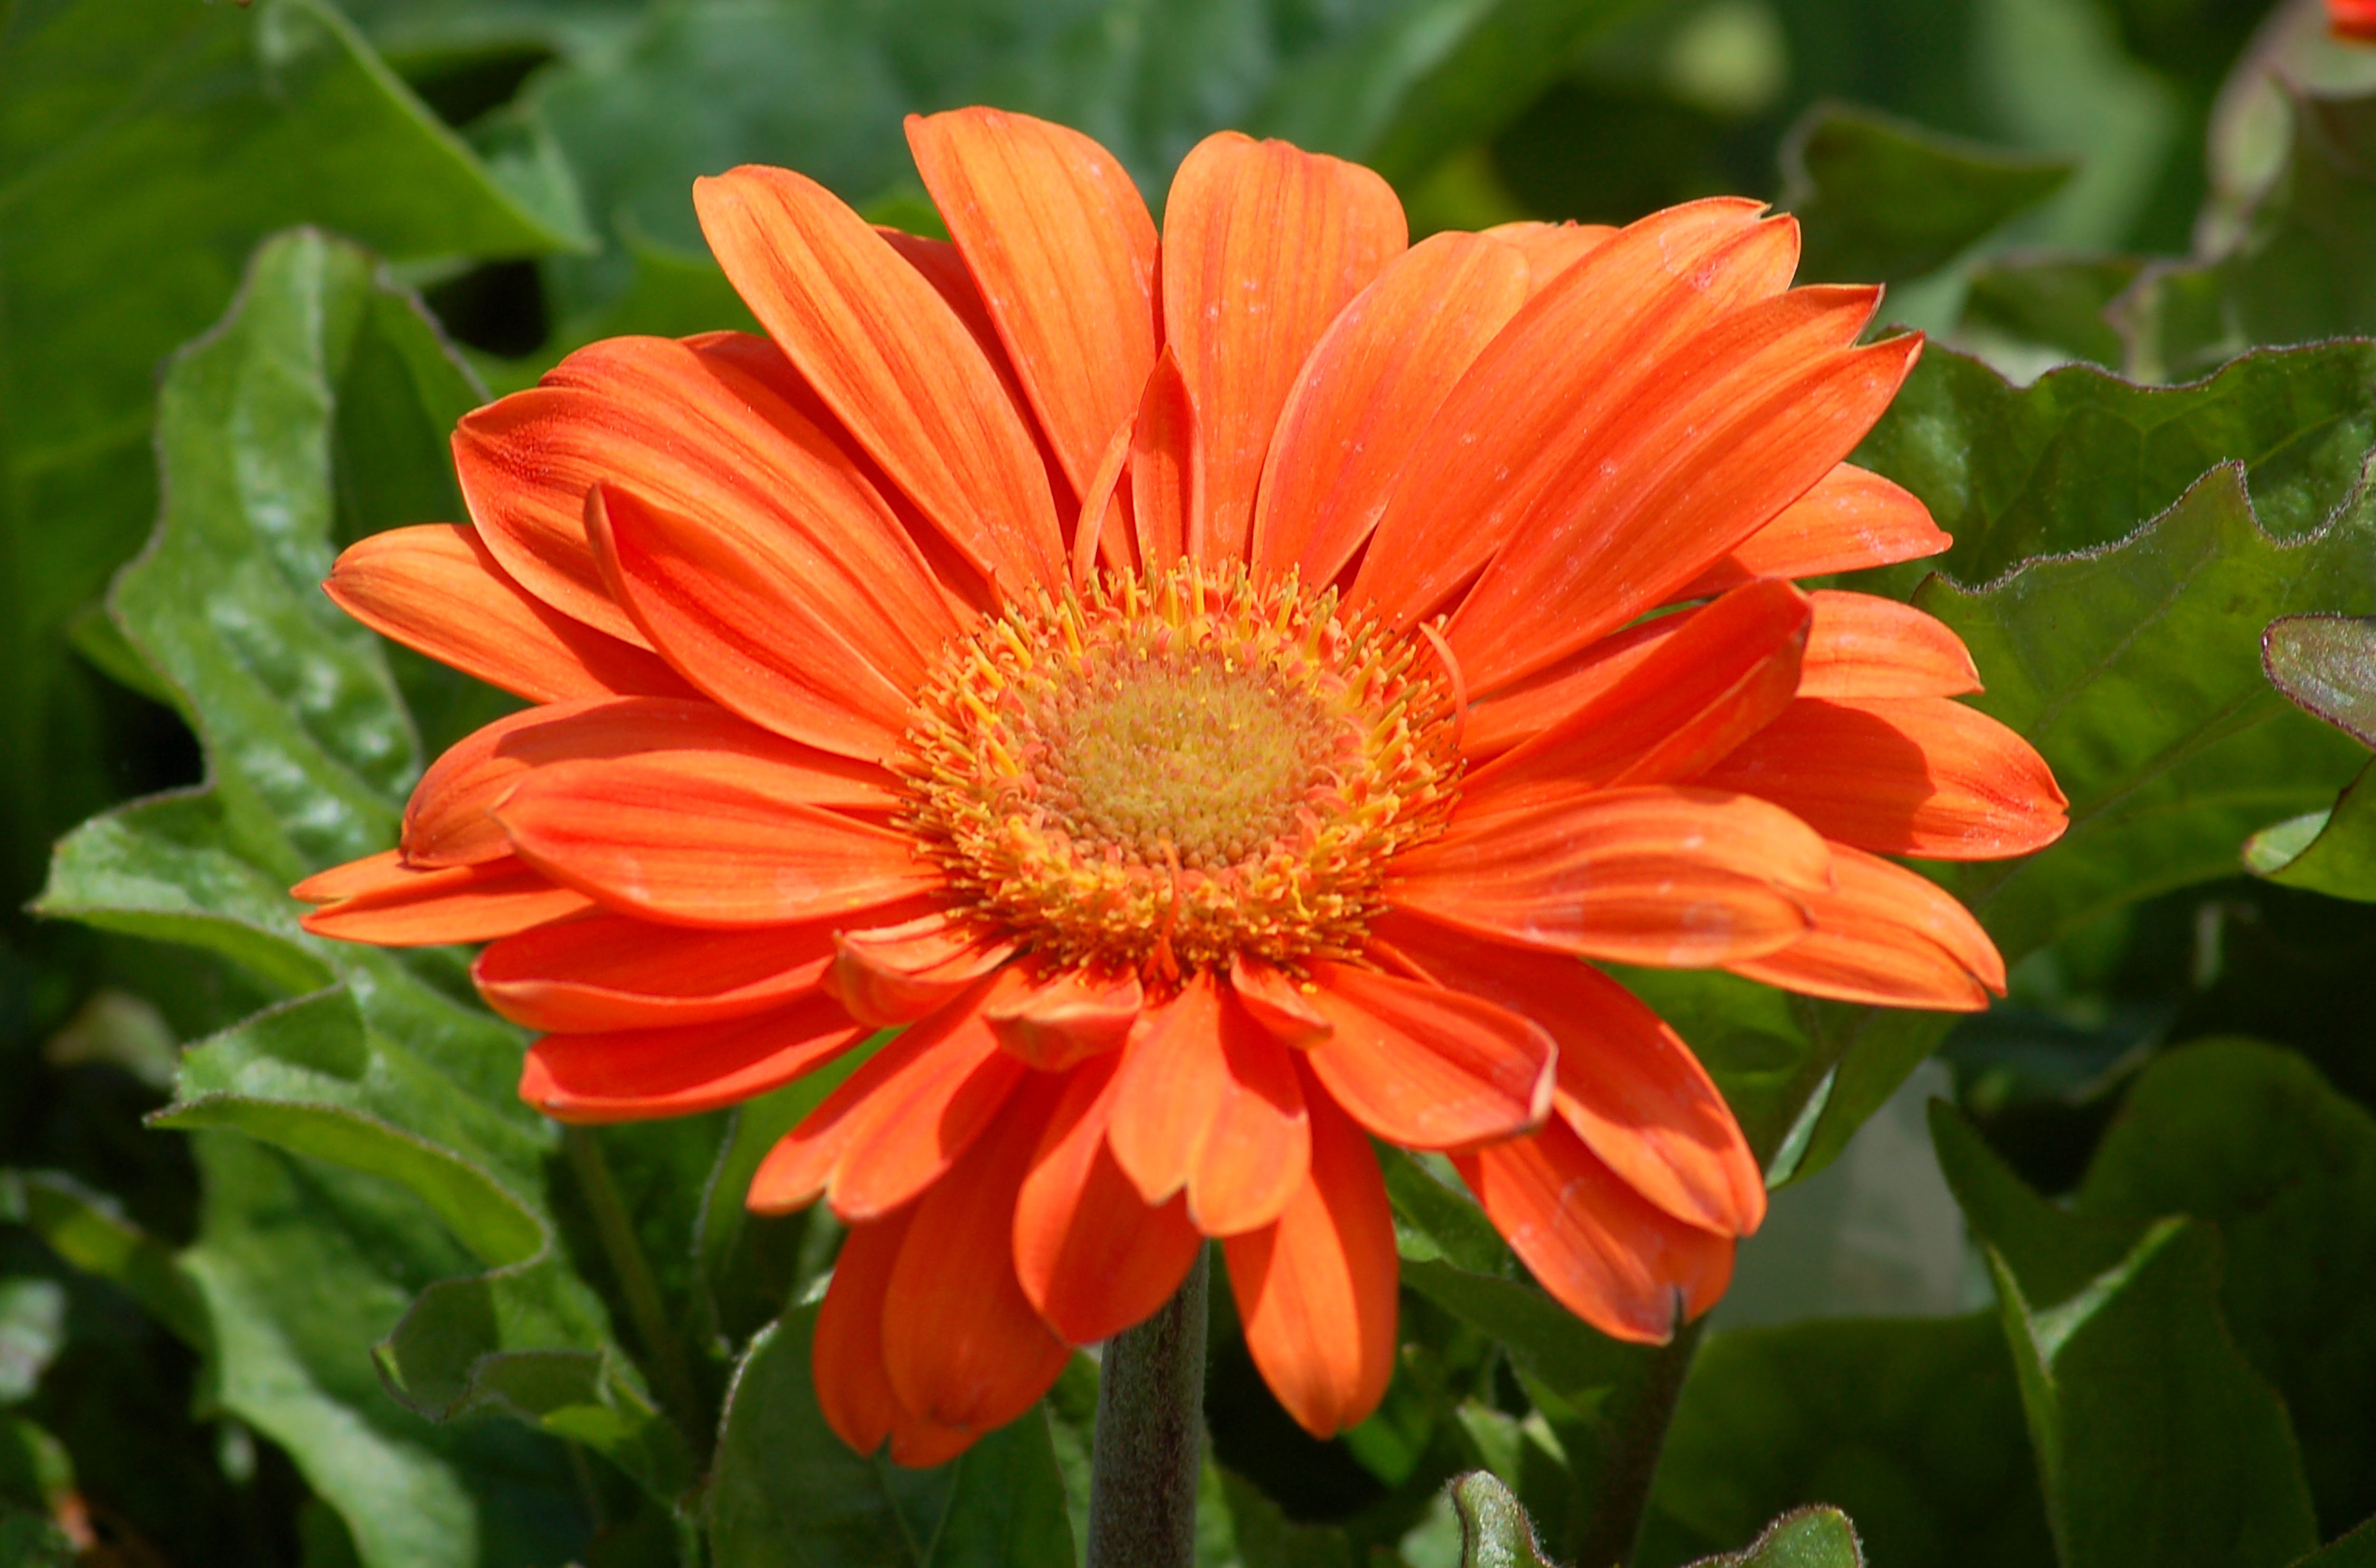 Gerbera Daisy Flowers: Tender Perennial in Many Colors